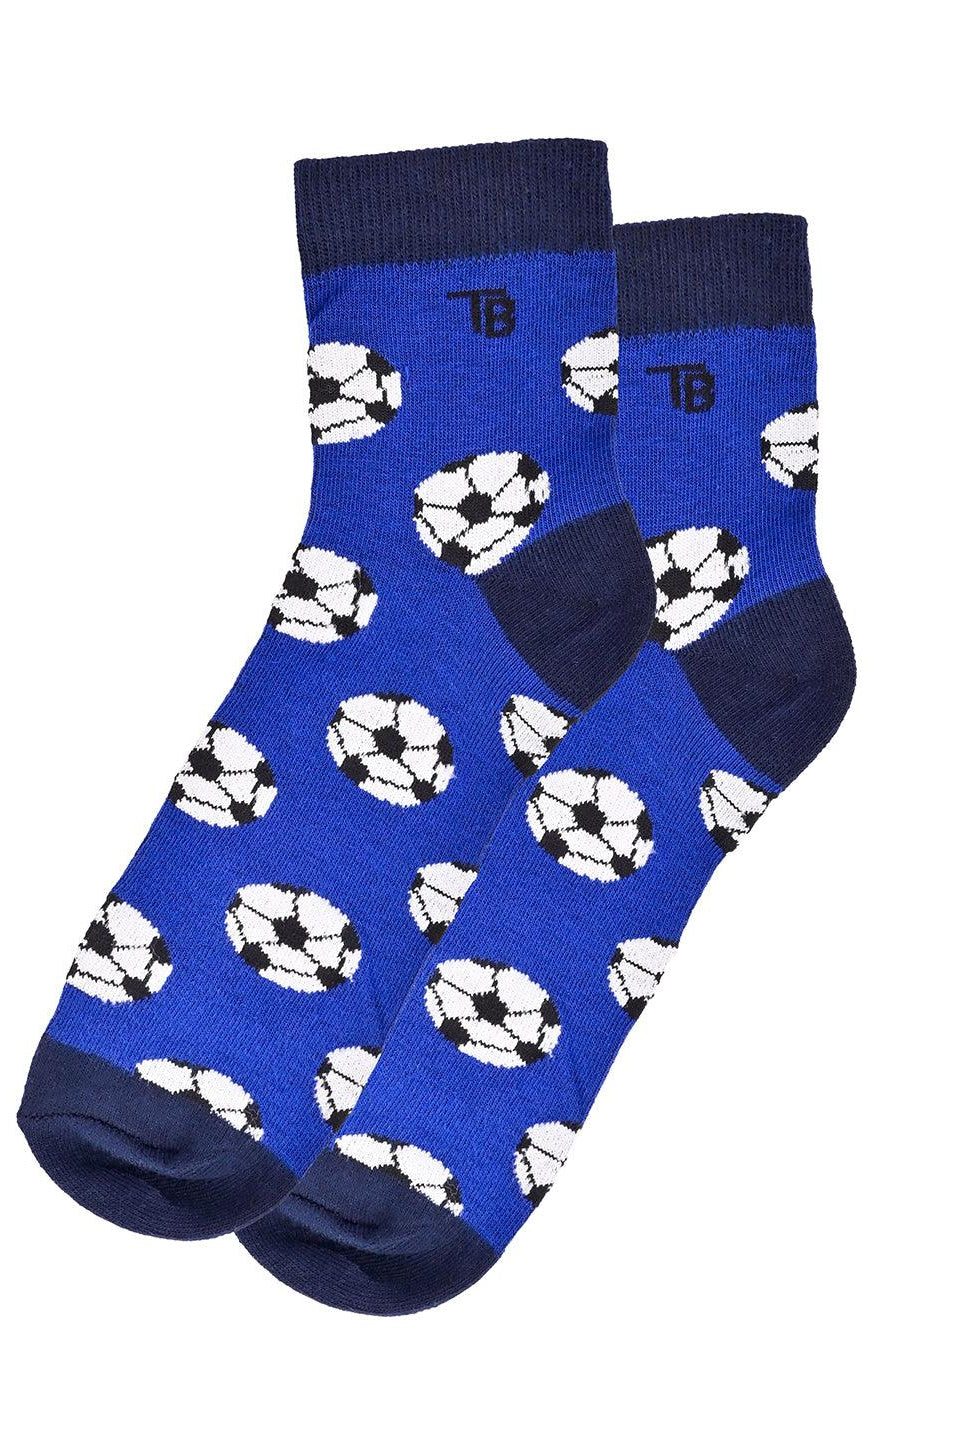 printed blue socks 